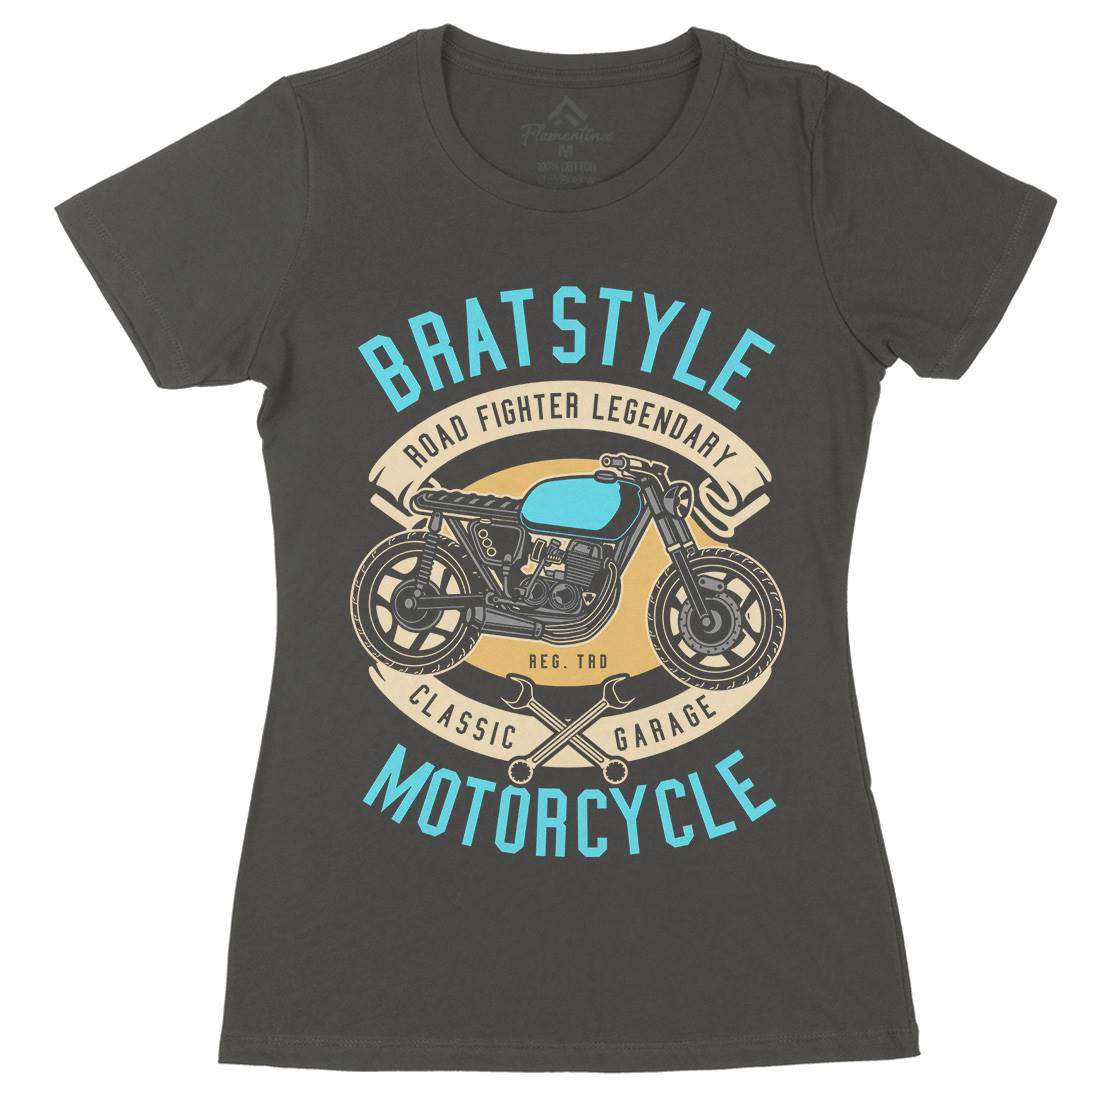 Brat Style Womens Organic Crew Neck T-Shirt Motorcycles D511